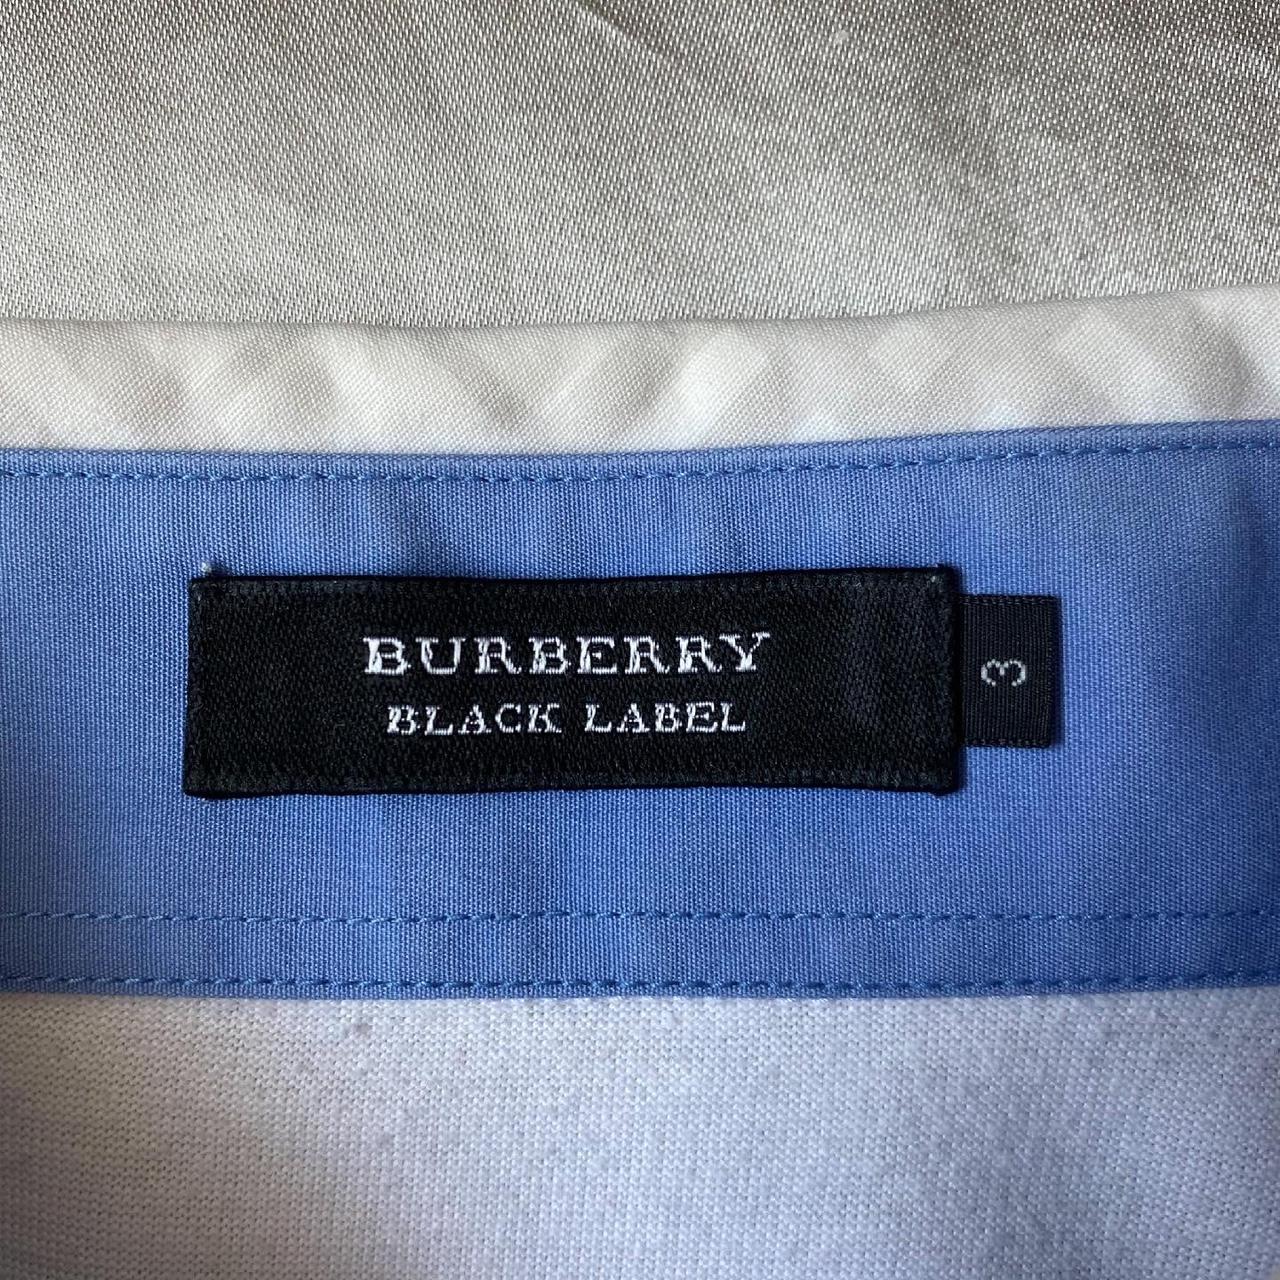 🐟 burberry black label white polo shirt an... - Depop